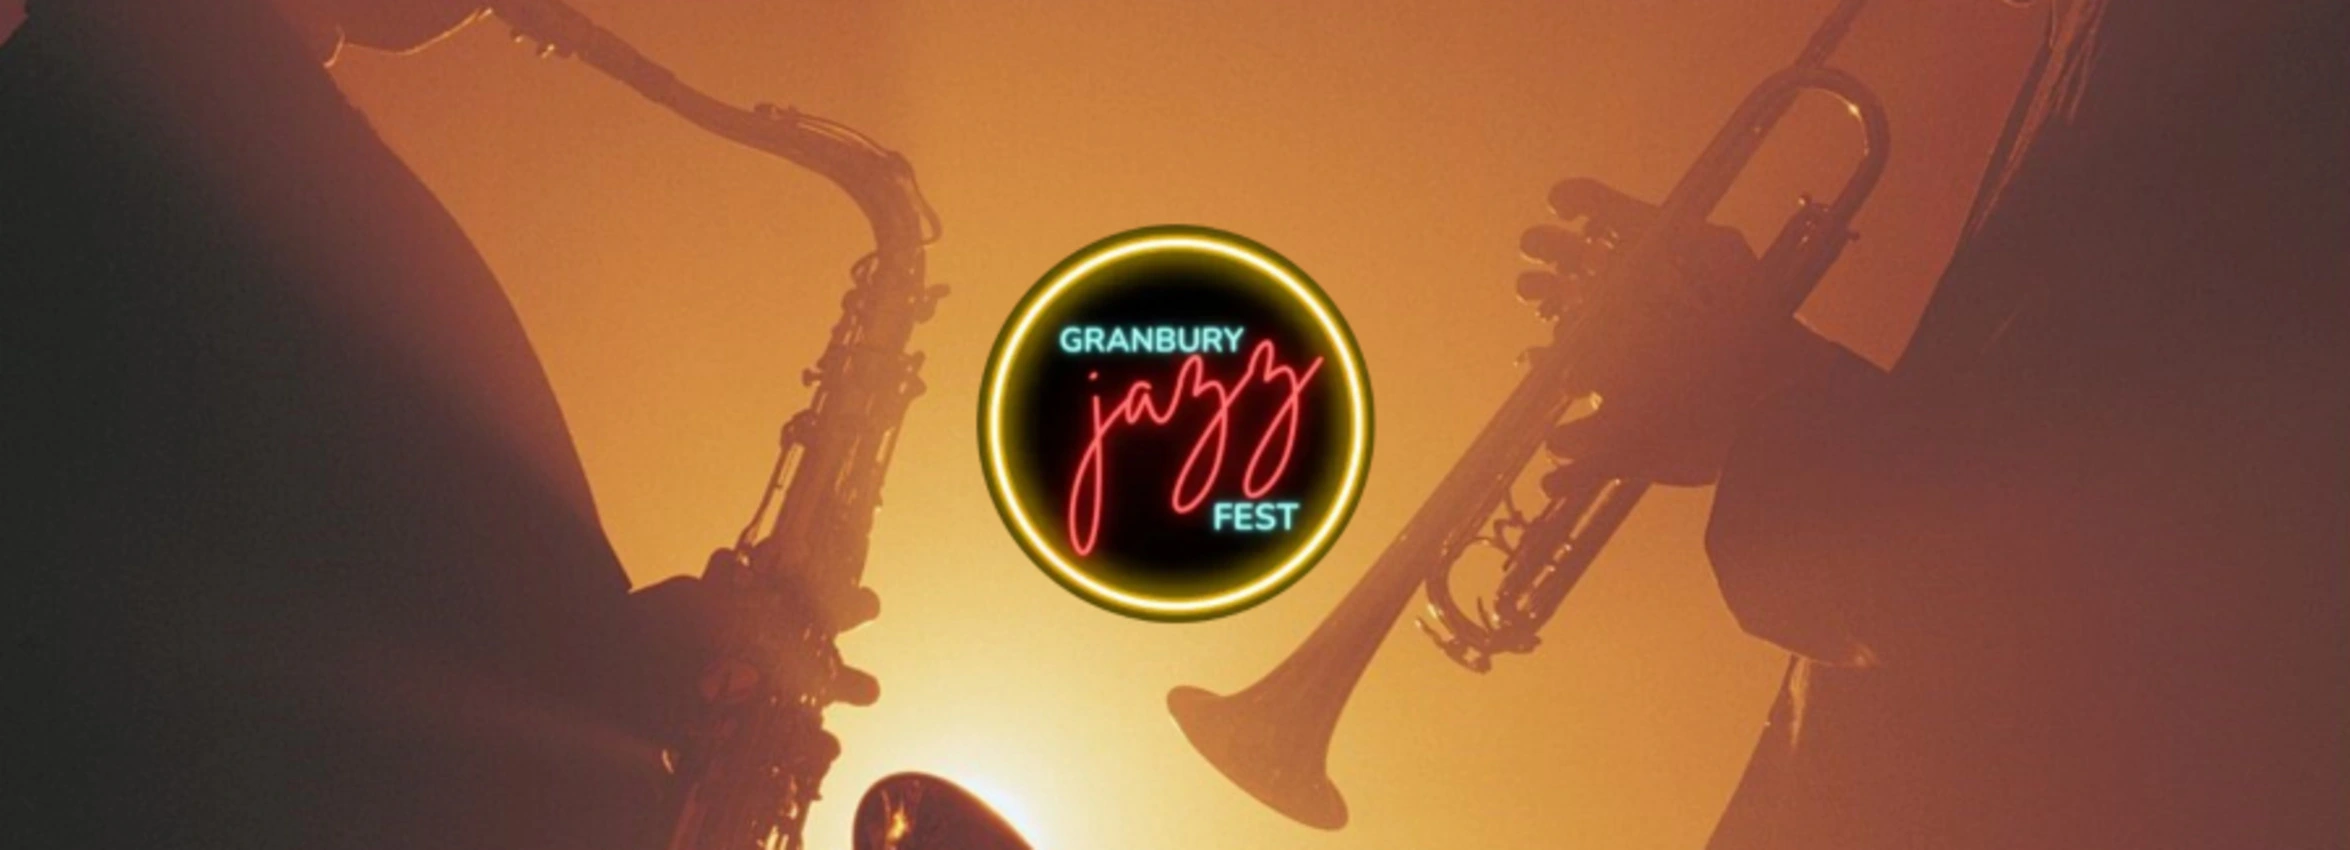 Granbury-Jazz-Fest_Desktop_ET